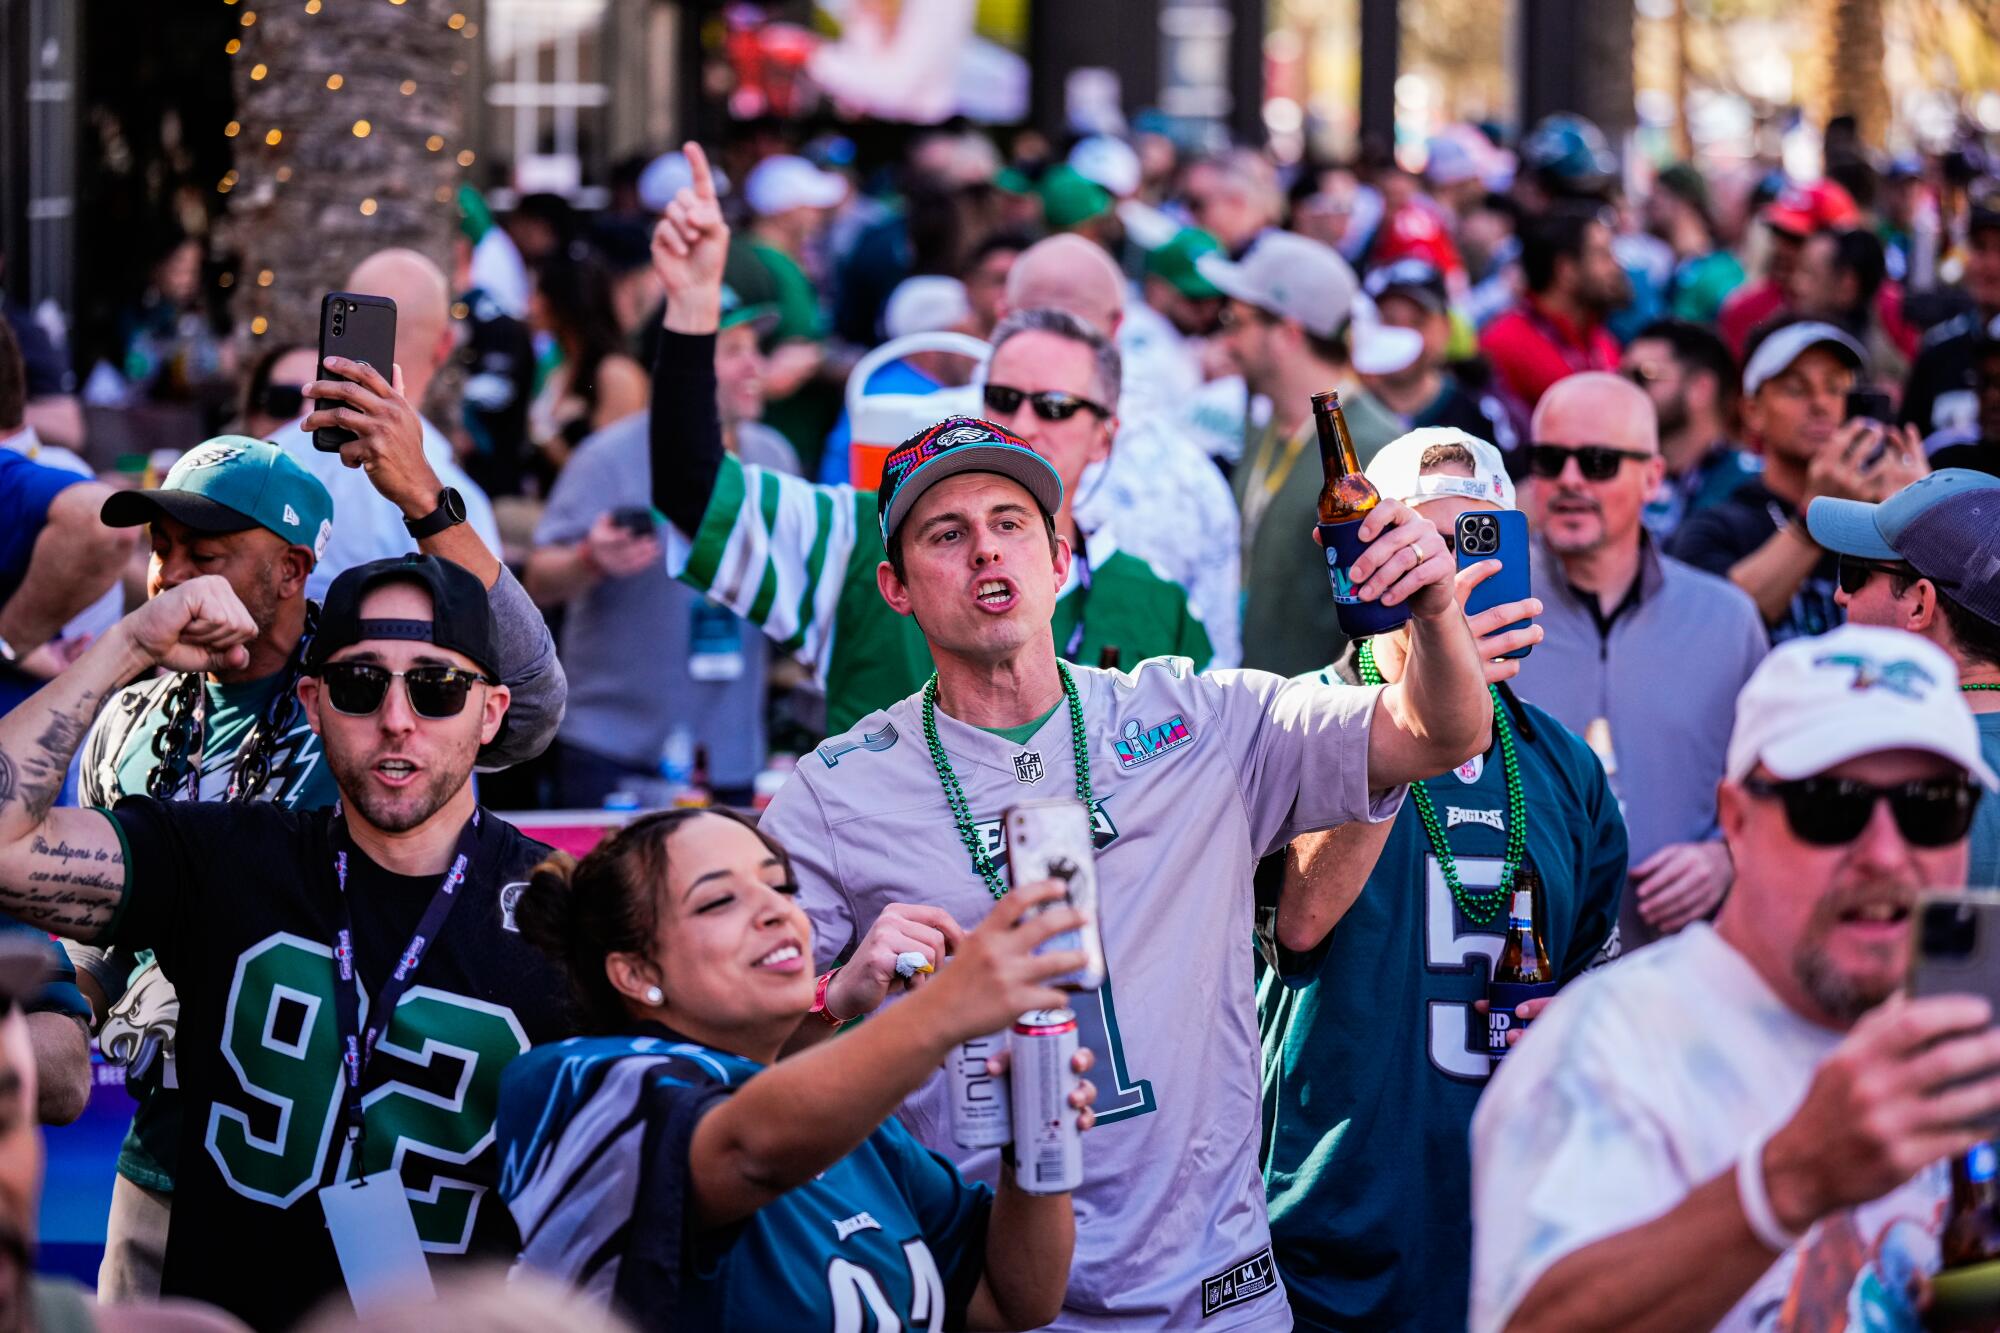 Super Bowl celebration in Philadelphia turns rowdy after Eagles